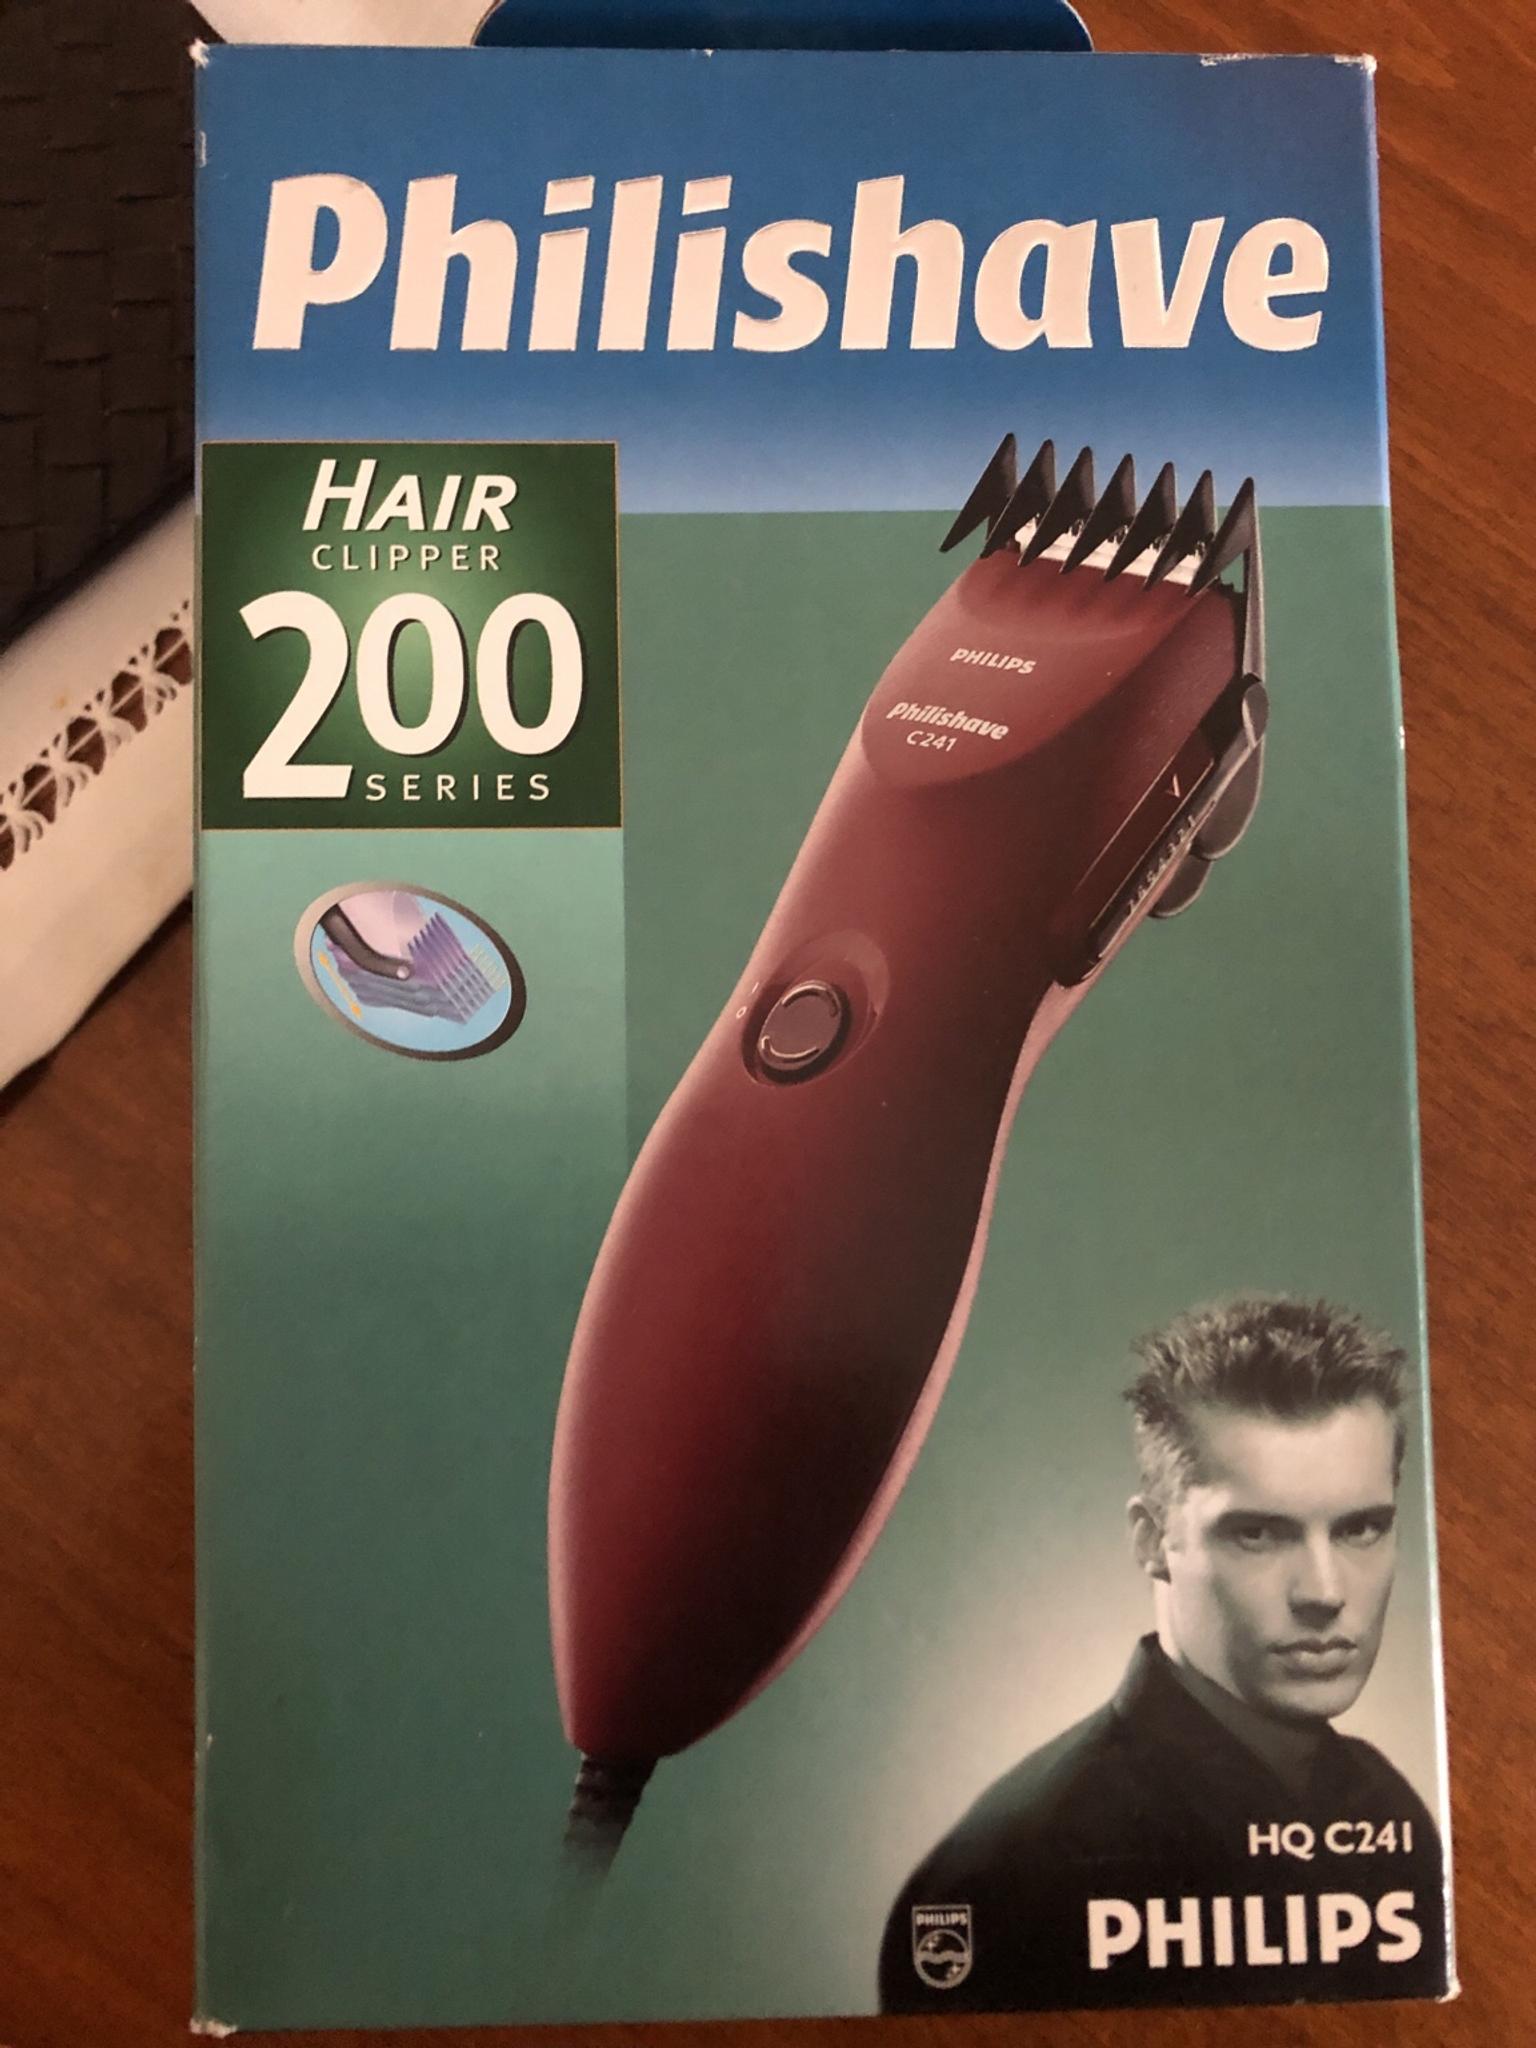 philishave hair trimmer